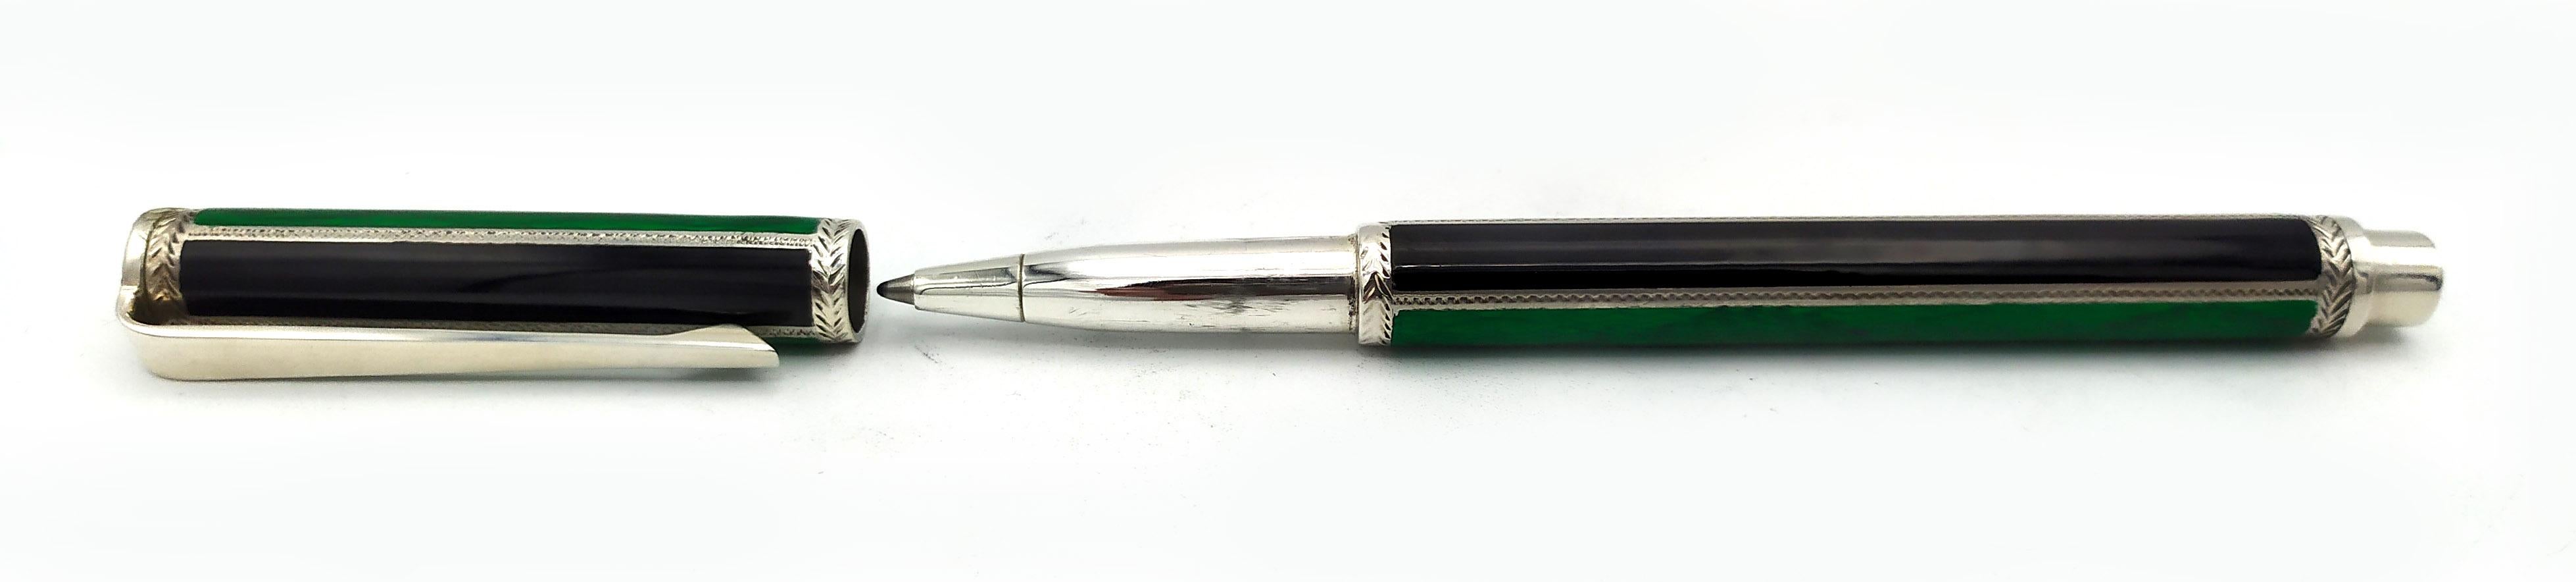 Fountain pen, Ballpoint pen and tray for a Desk Set green enamel Salimbeni  For Sale 6